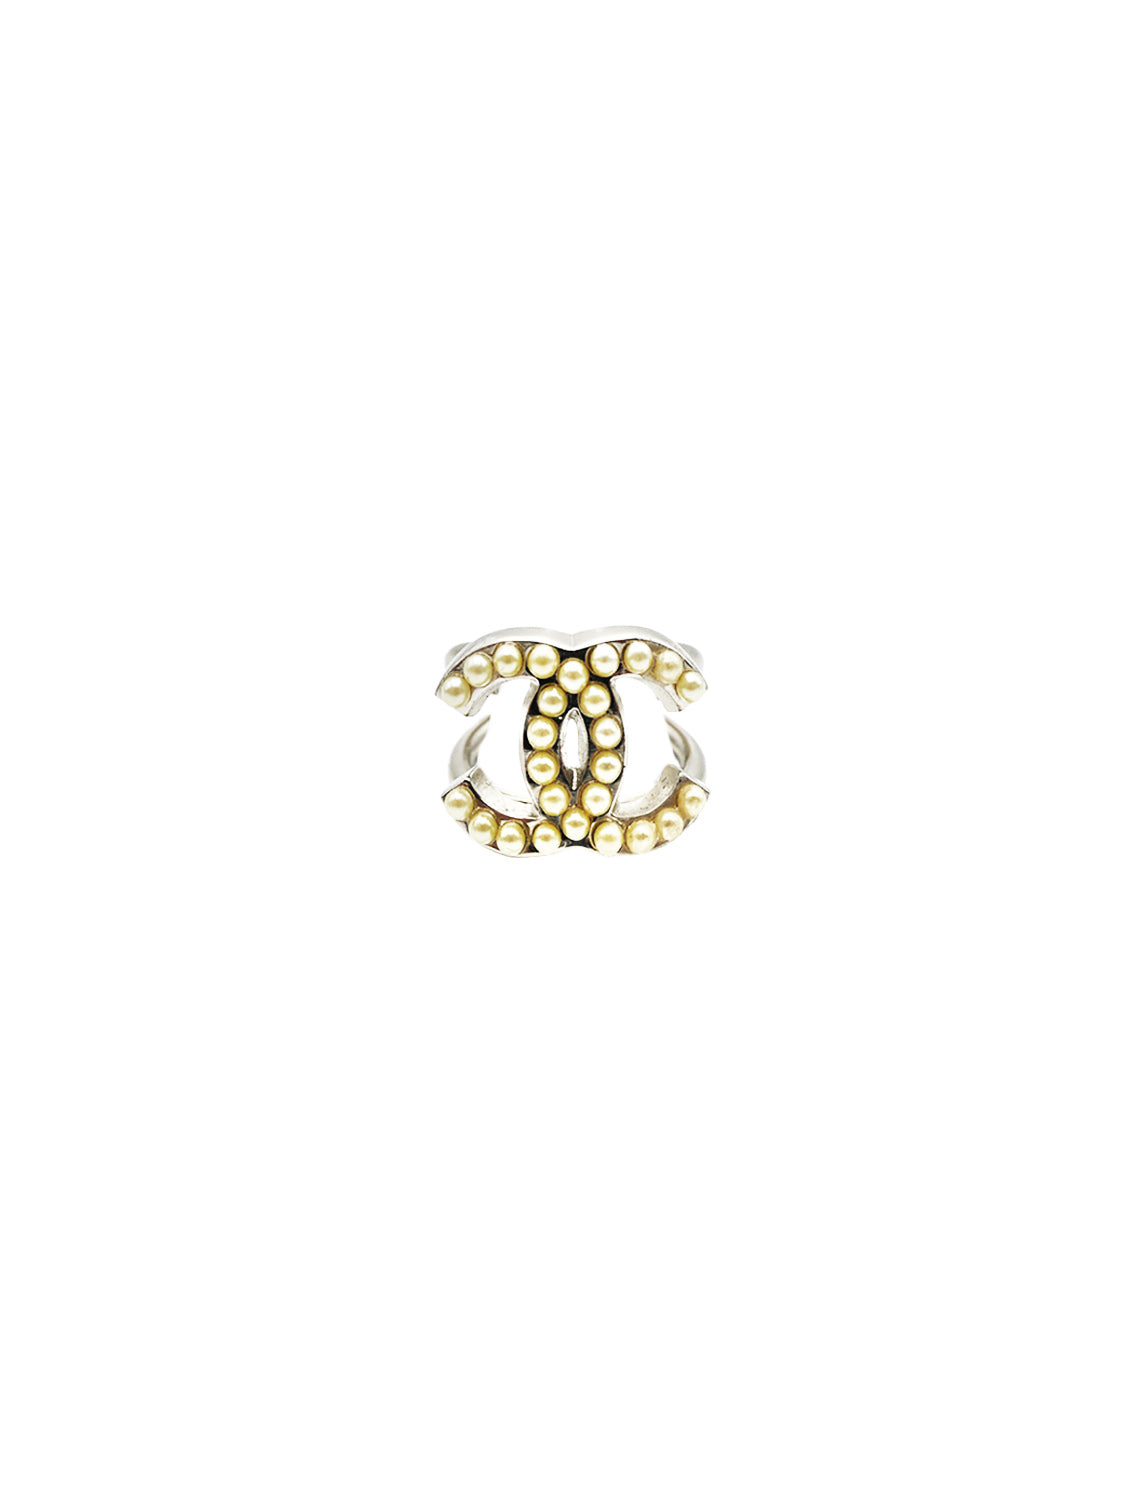 Channel Set Baguette Diamond 14k Gold Ring